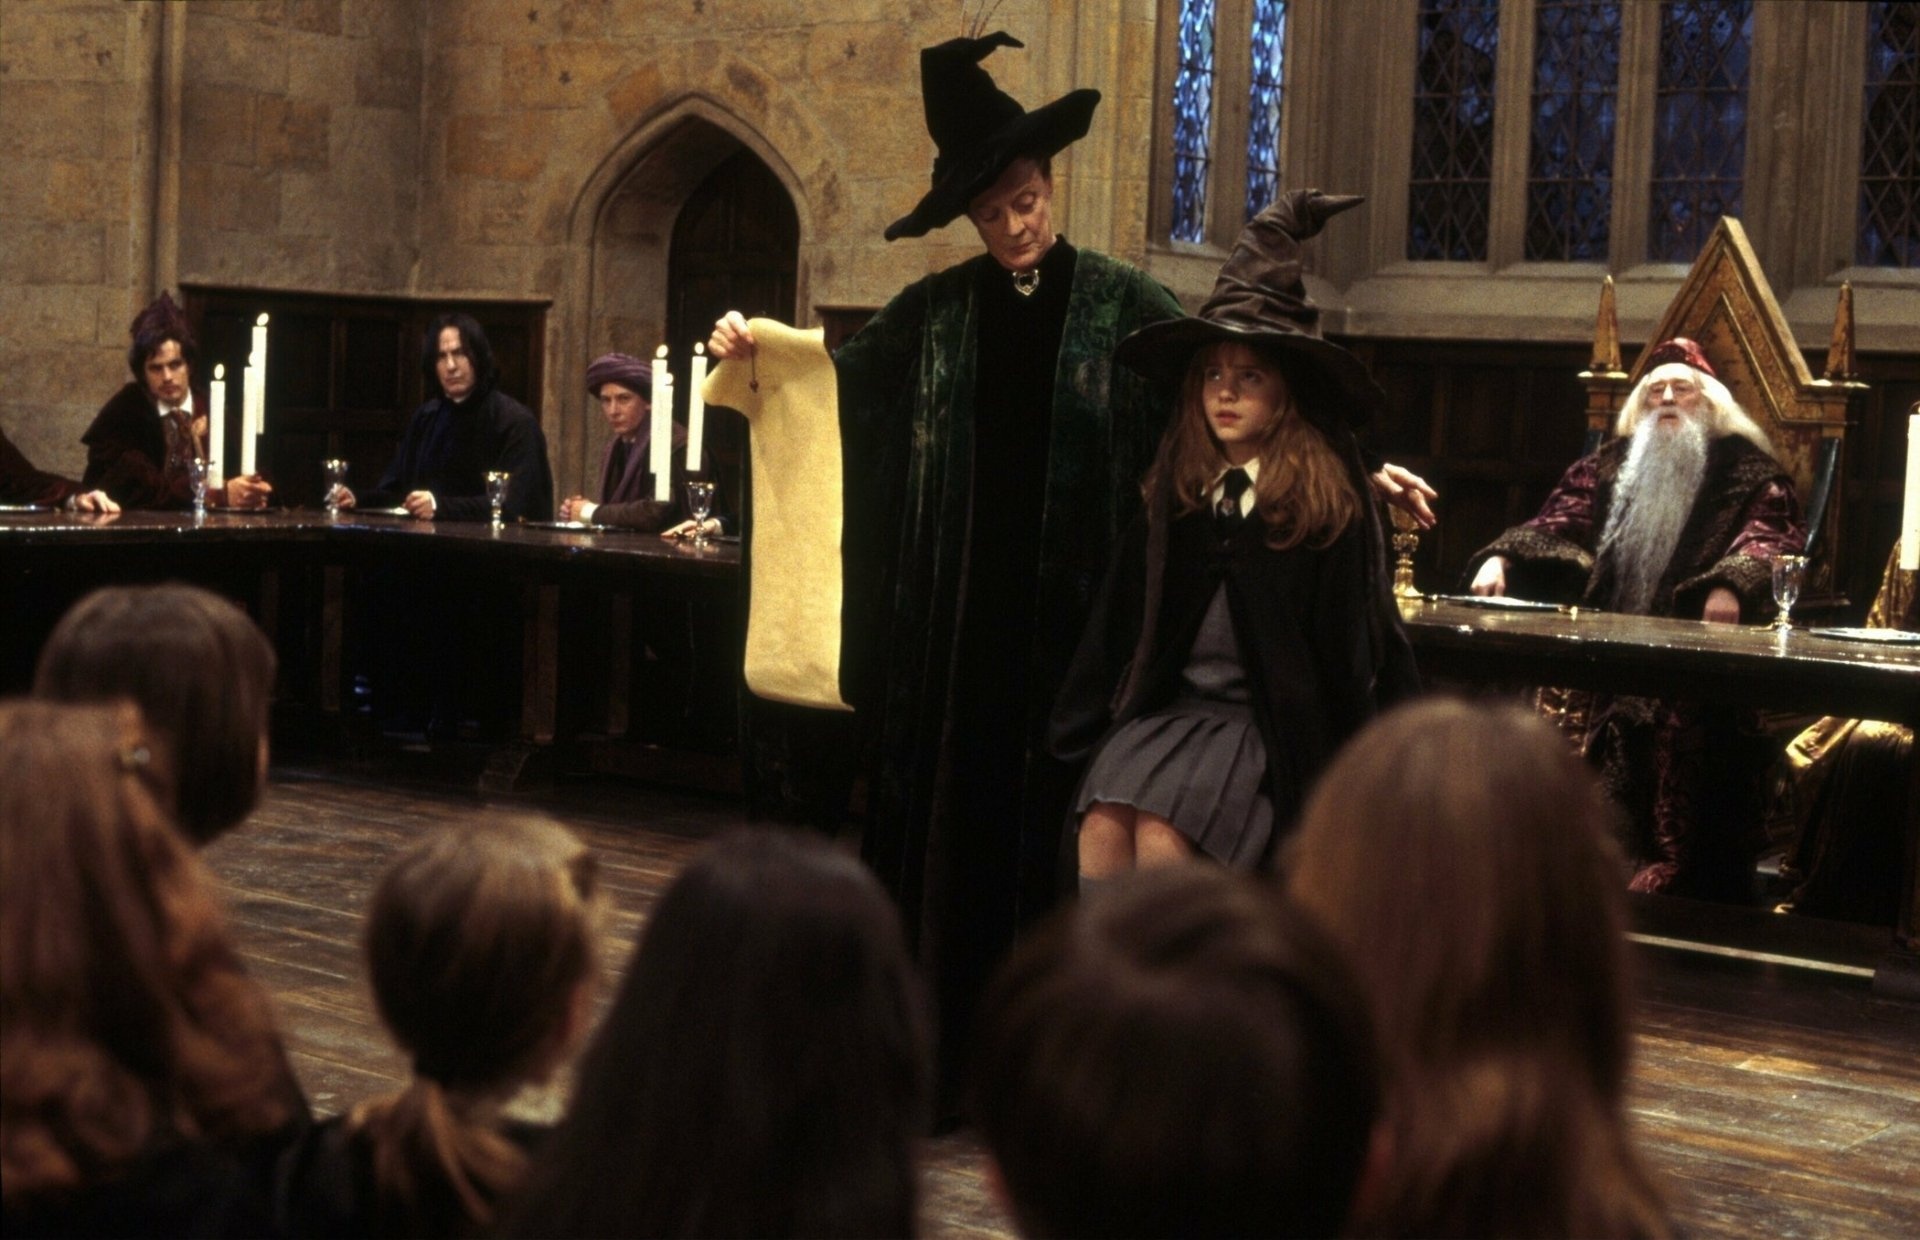 Professor McGonagall movie, Sorting ceremony, Hogwarts emblem, Wallpaper background, 1920x1240 HD Desktop